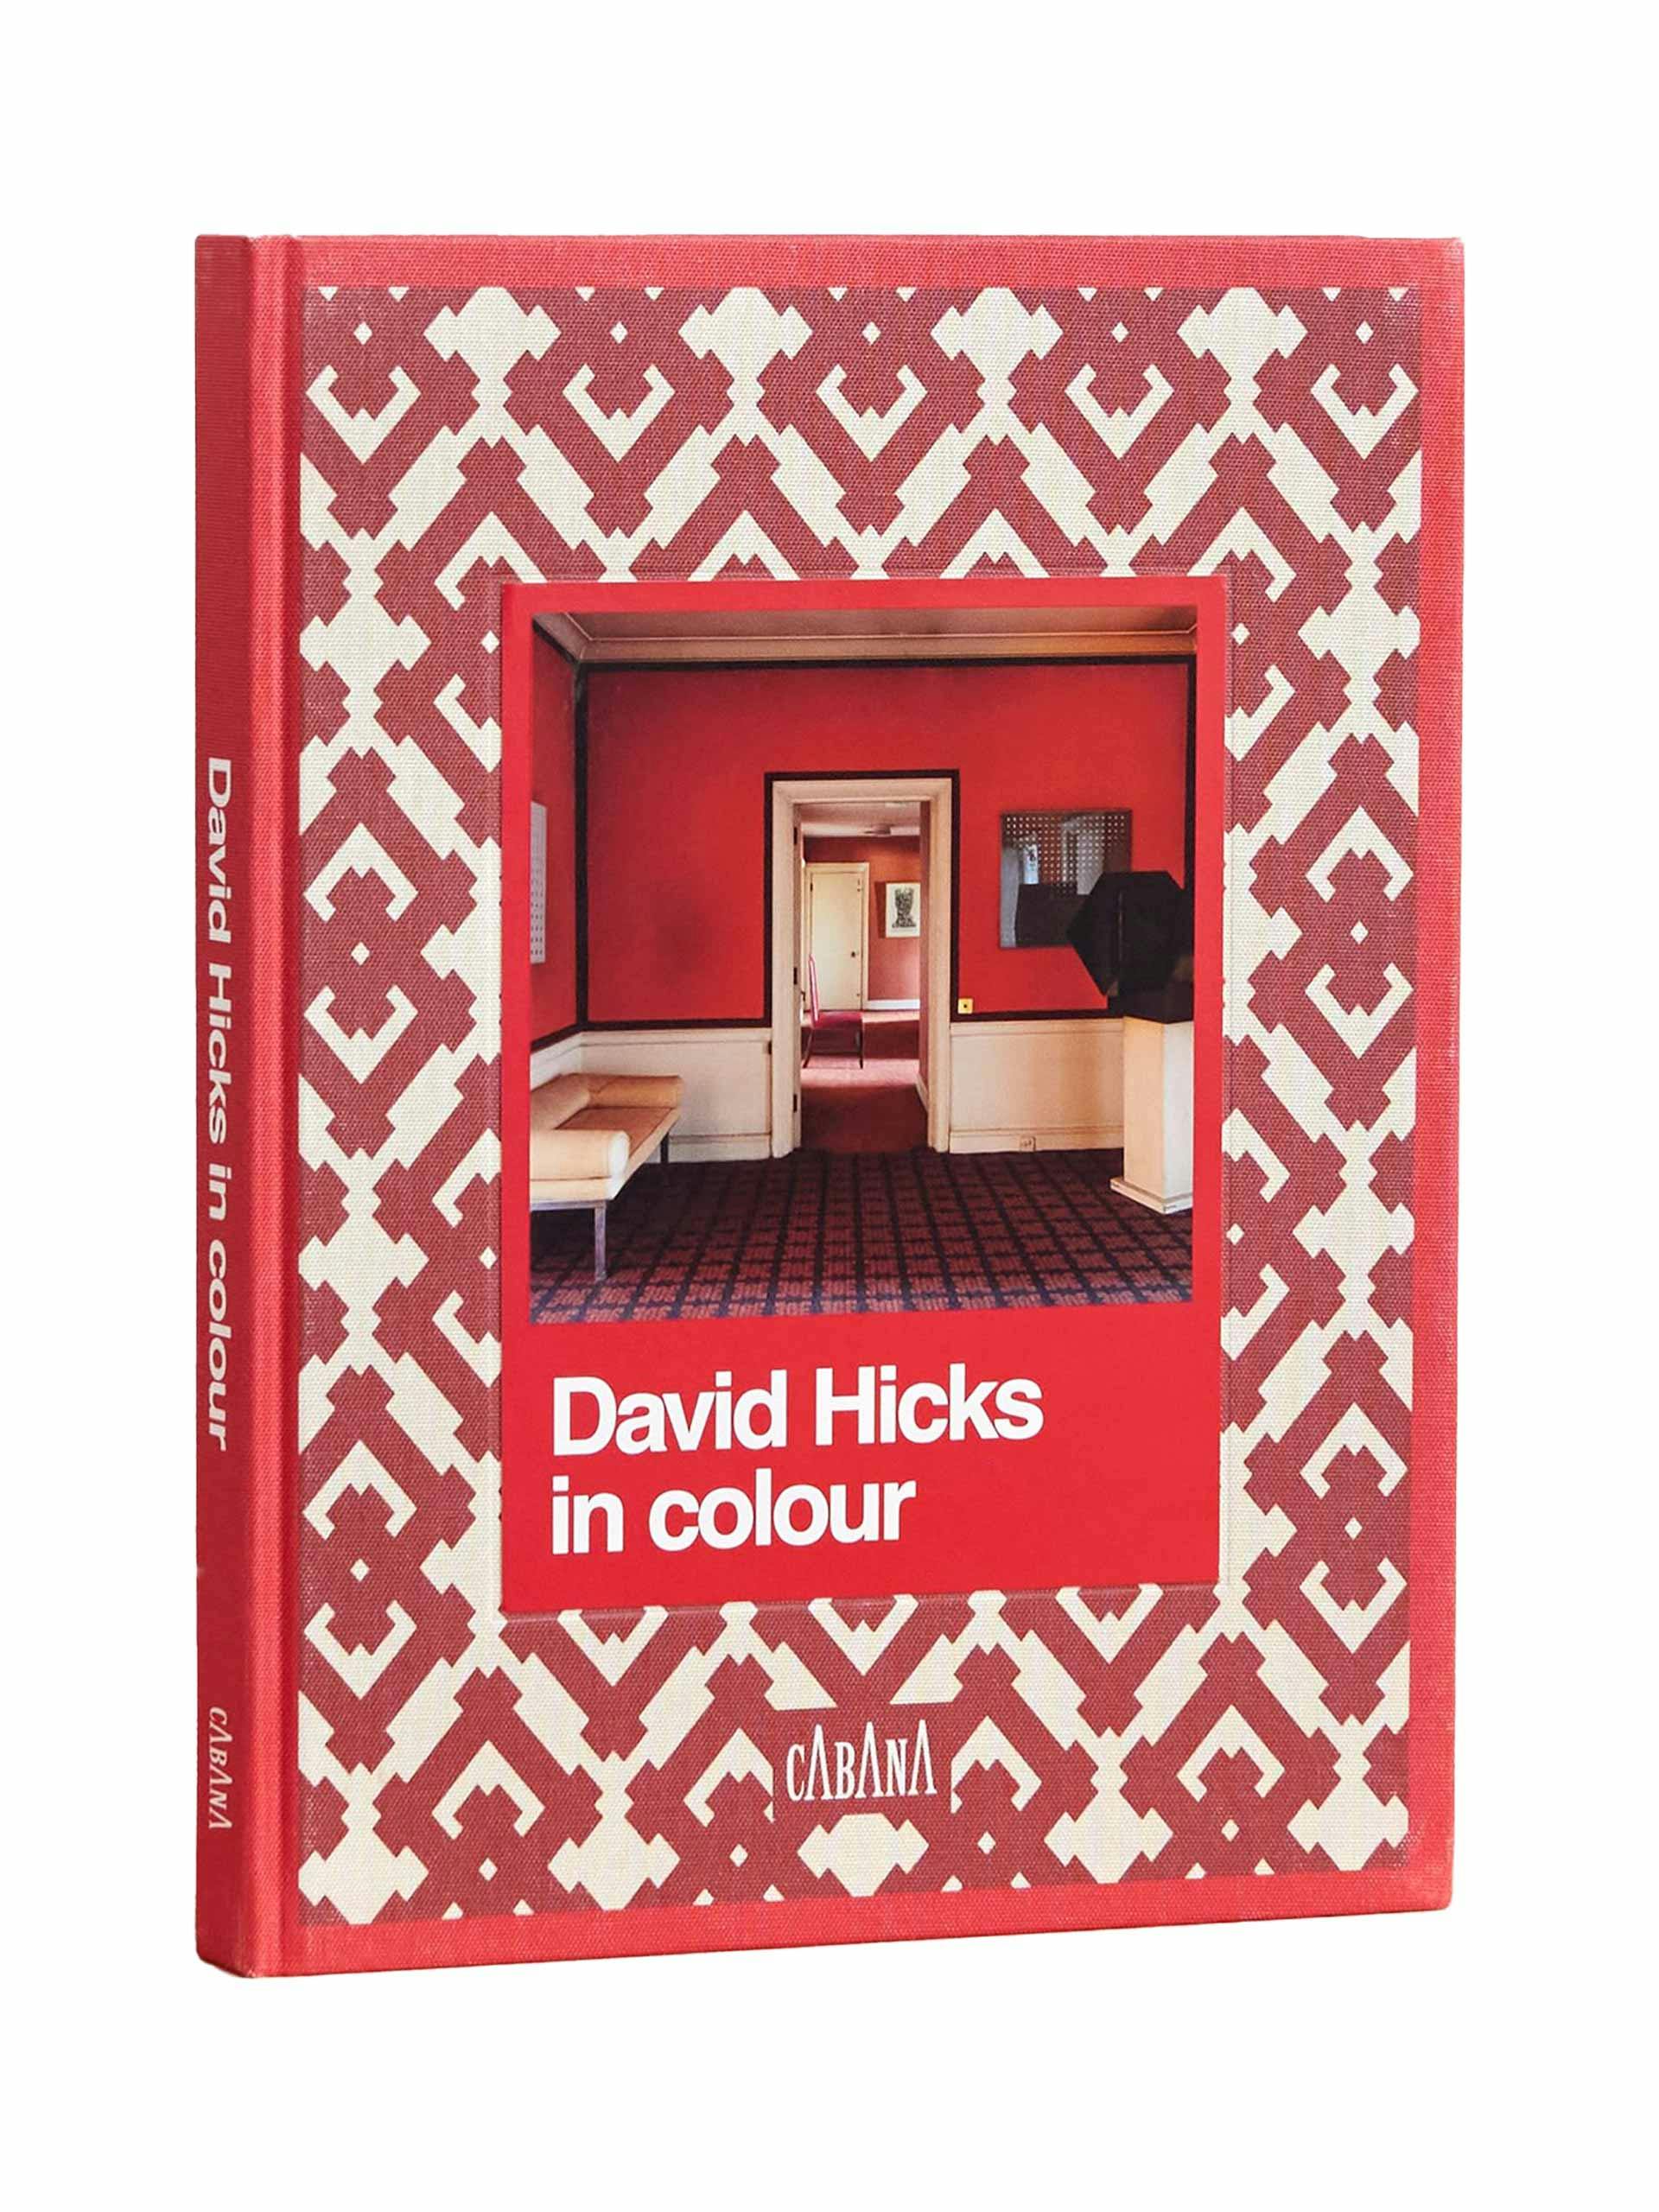 'David Hicks in Colour' hardcover book